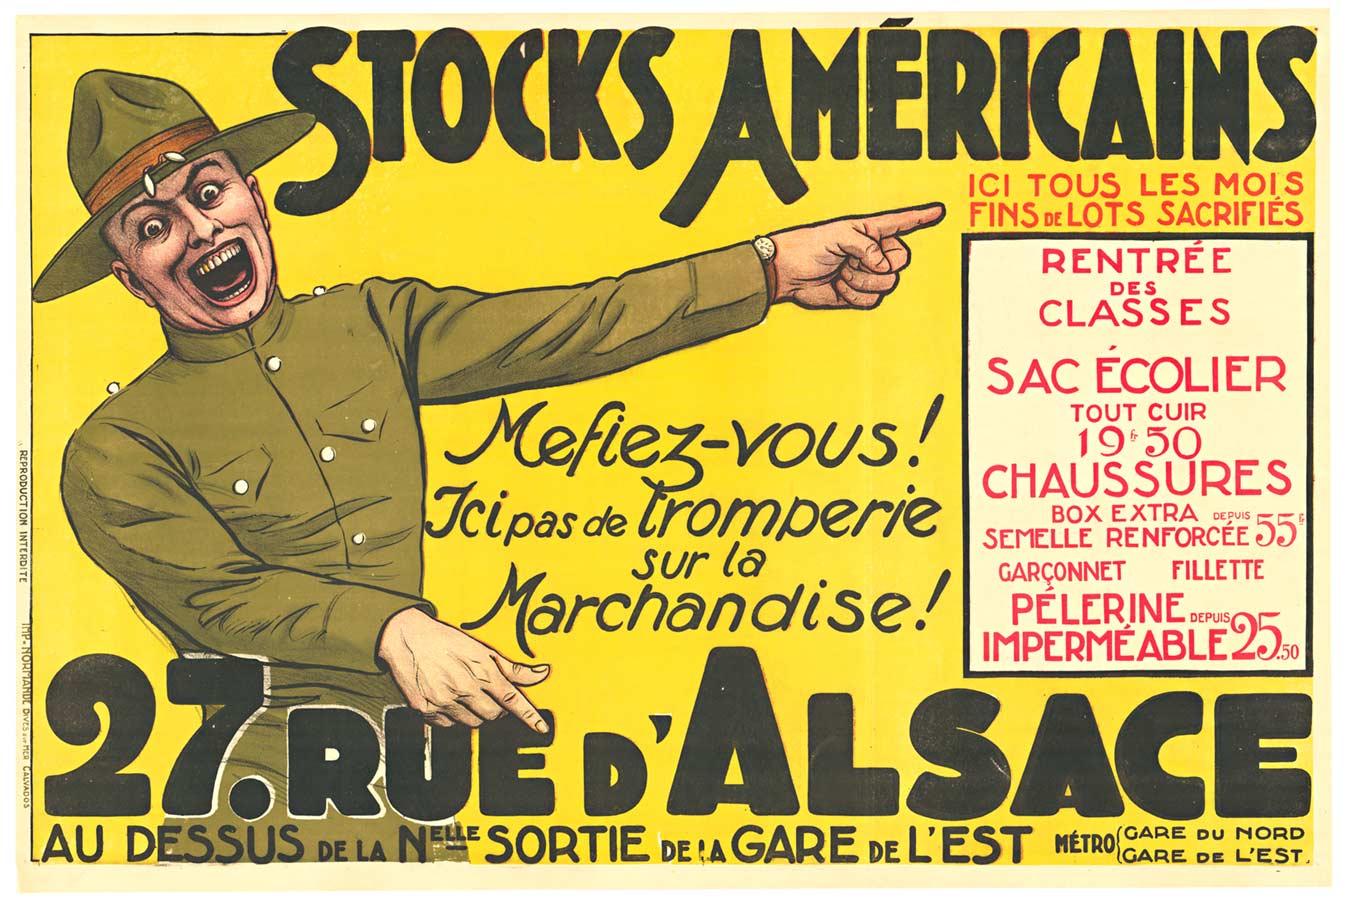 Unknown Portrait Print - Original "Stocks Americains" vintage French poster  horizontal format